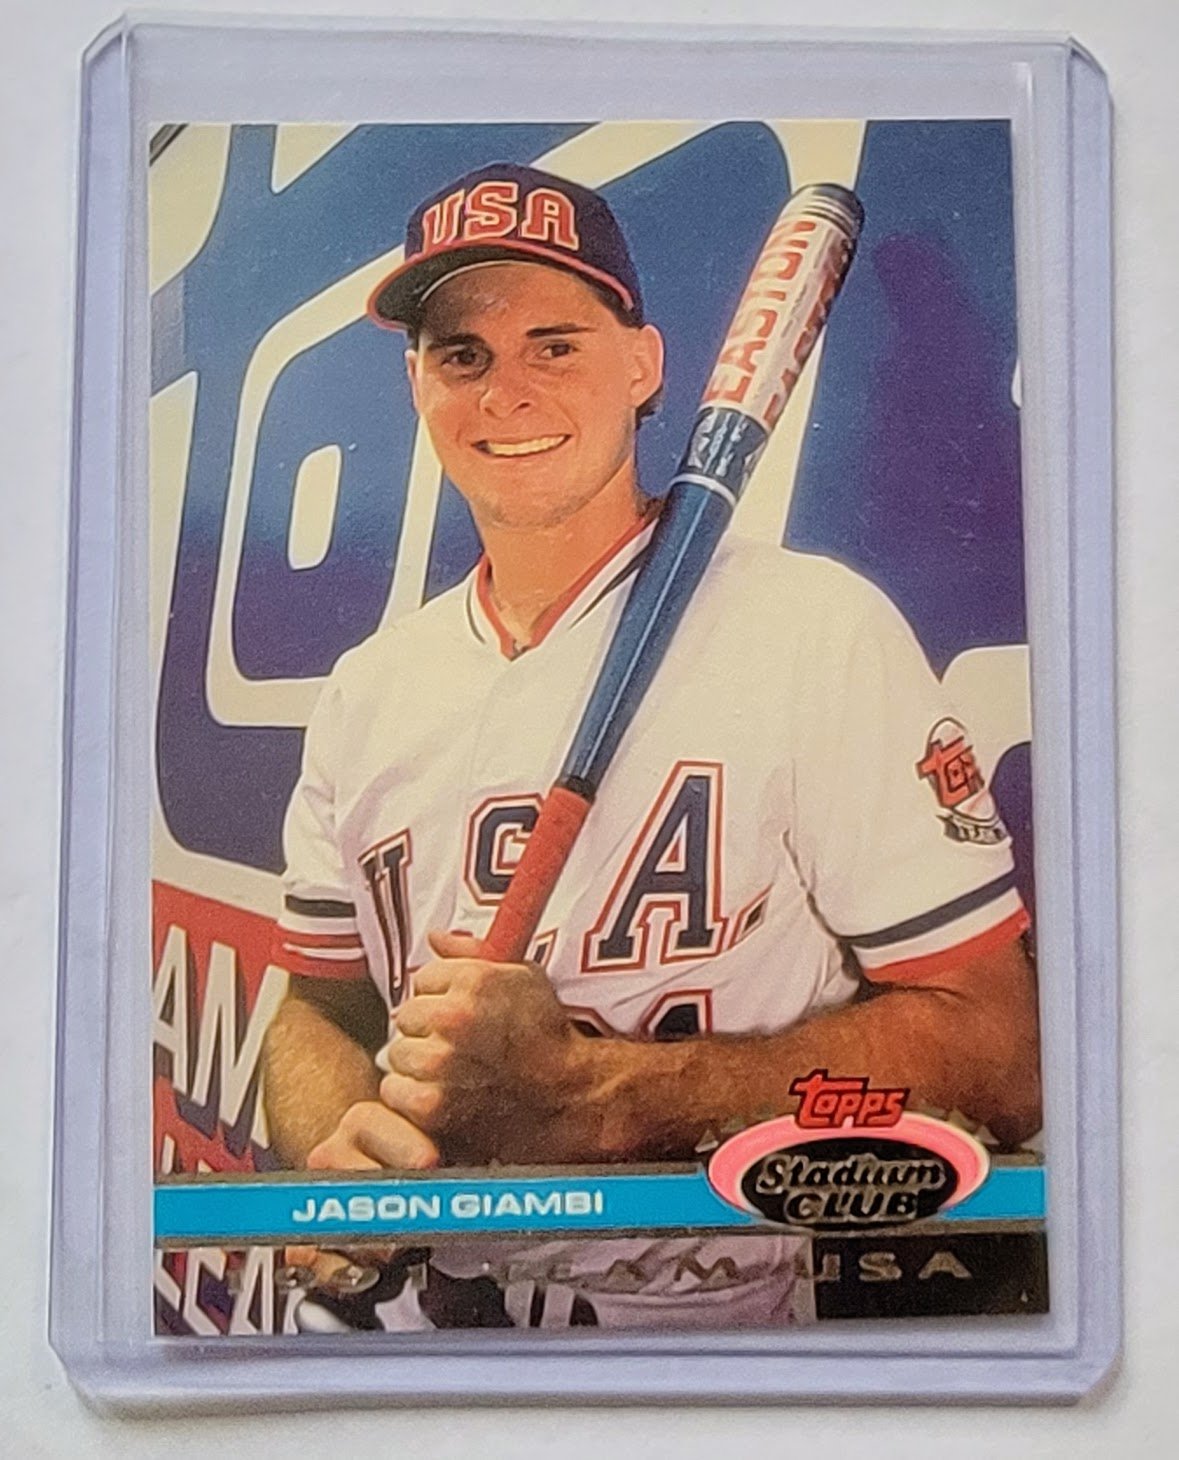 1992 Topps Stadium Club Dome Jason Giambi 1991 Team USA MLB Baseball Trading Card TPTV simple Xclusive Collectibles   